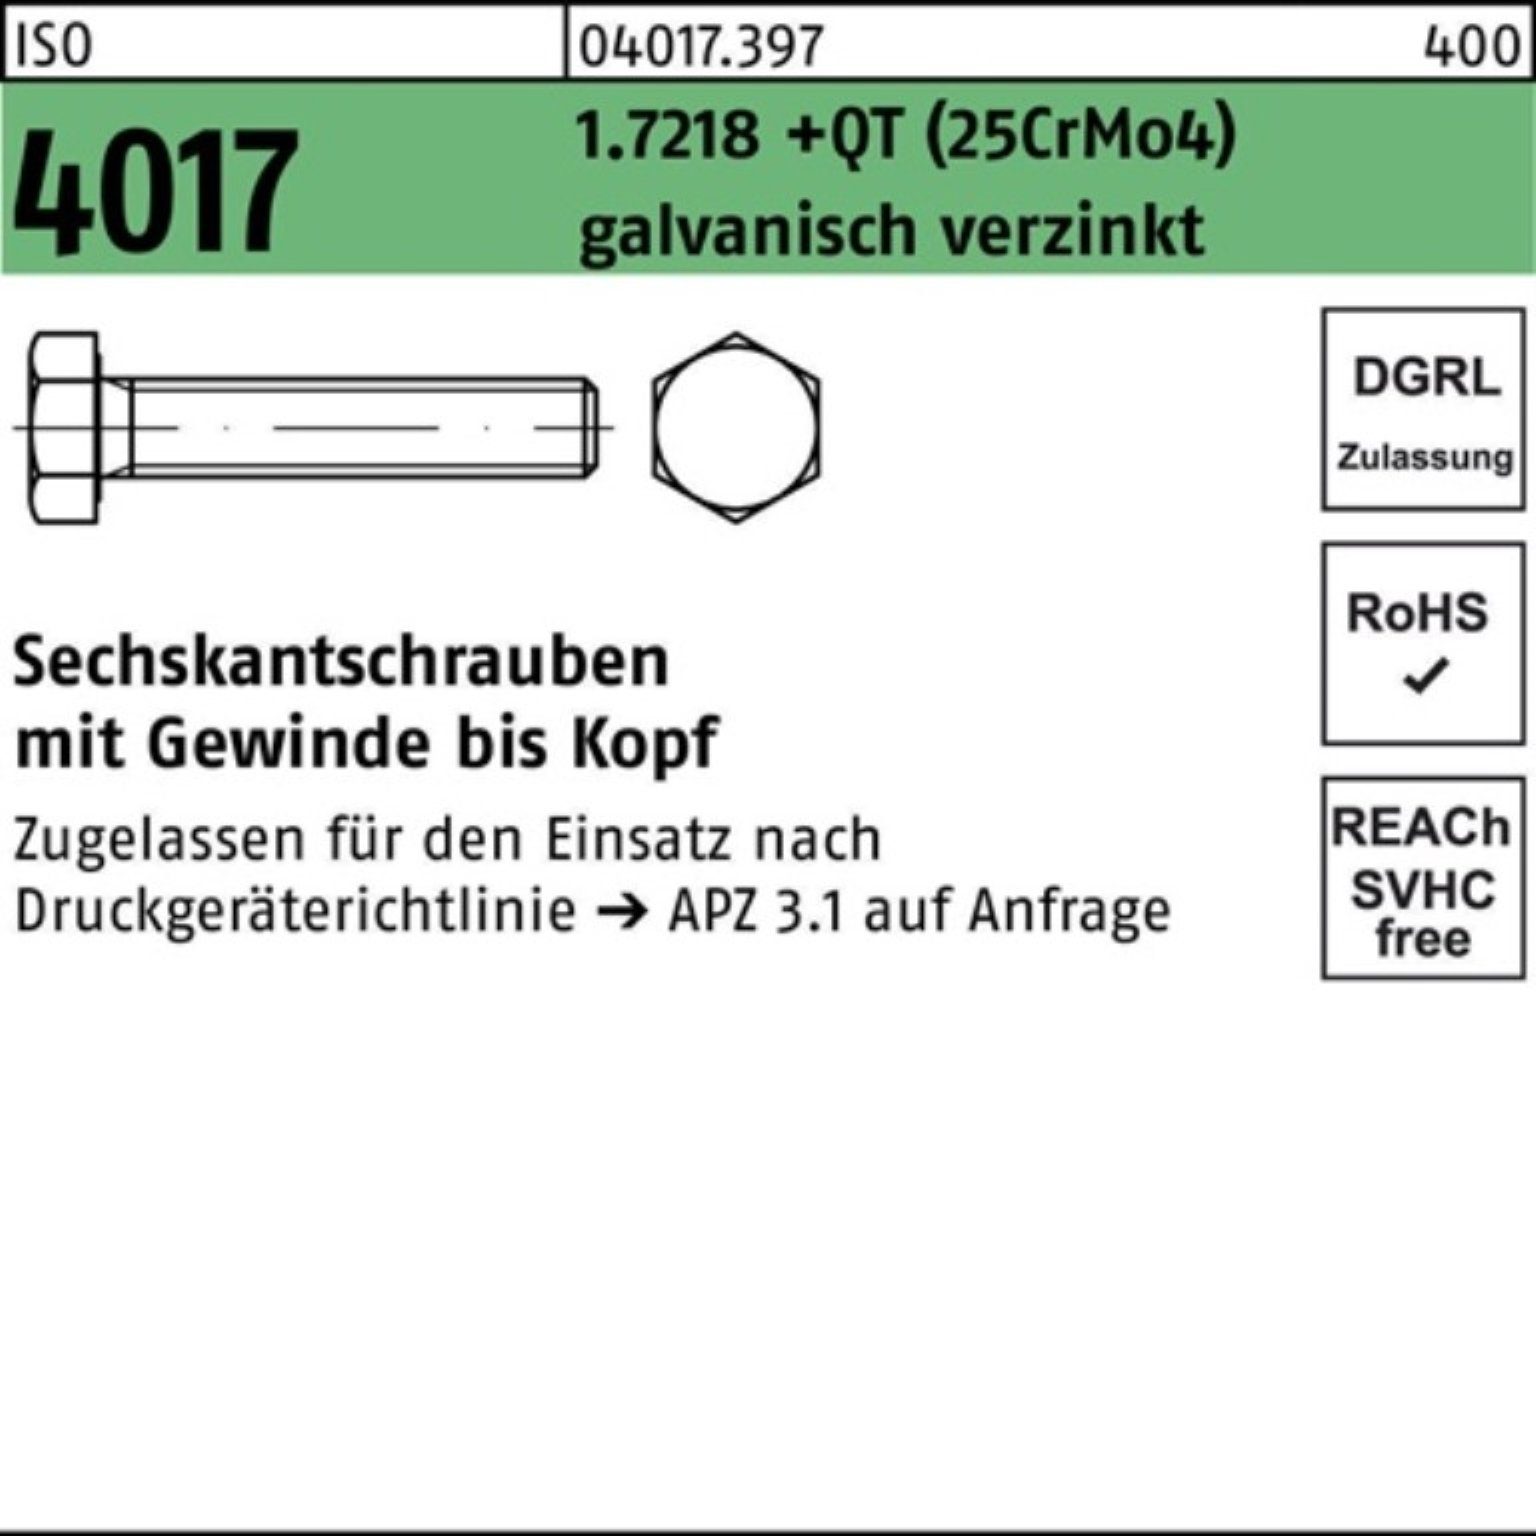 Bufab Sechskantschraube VG Sechskantschraube M12x50 100er 1.7218 Pack +QT (25CrMo4) 4017 g ISO